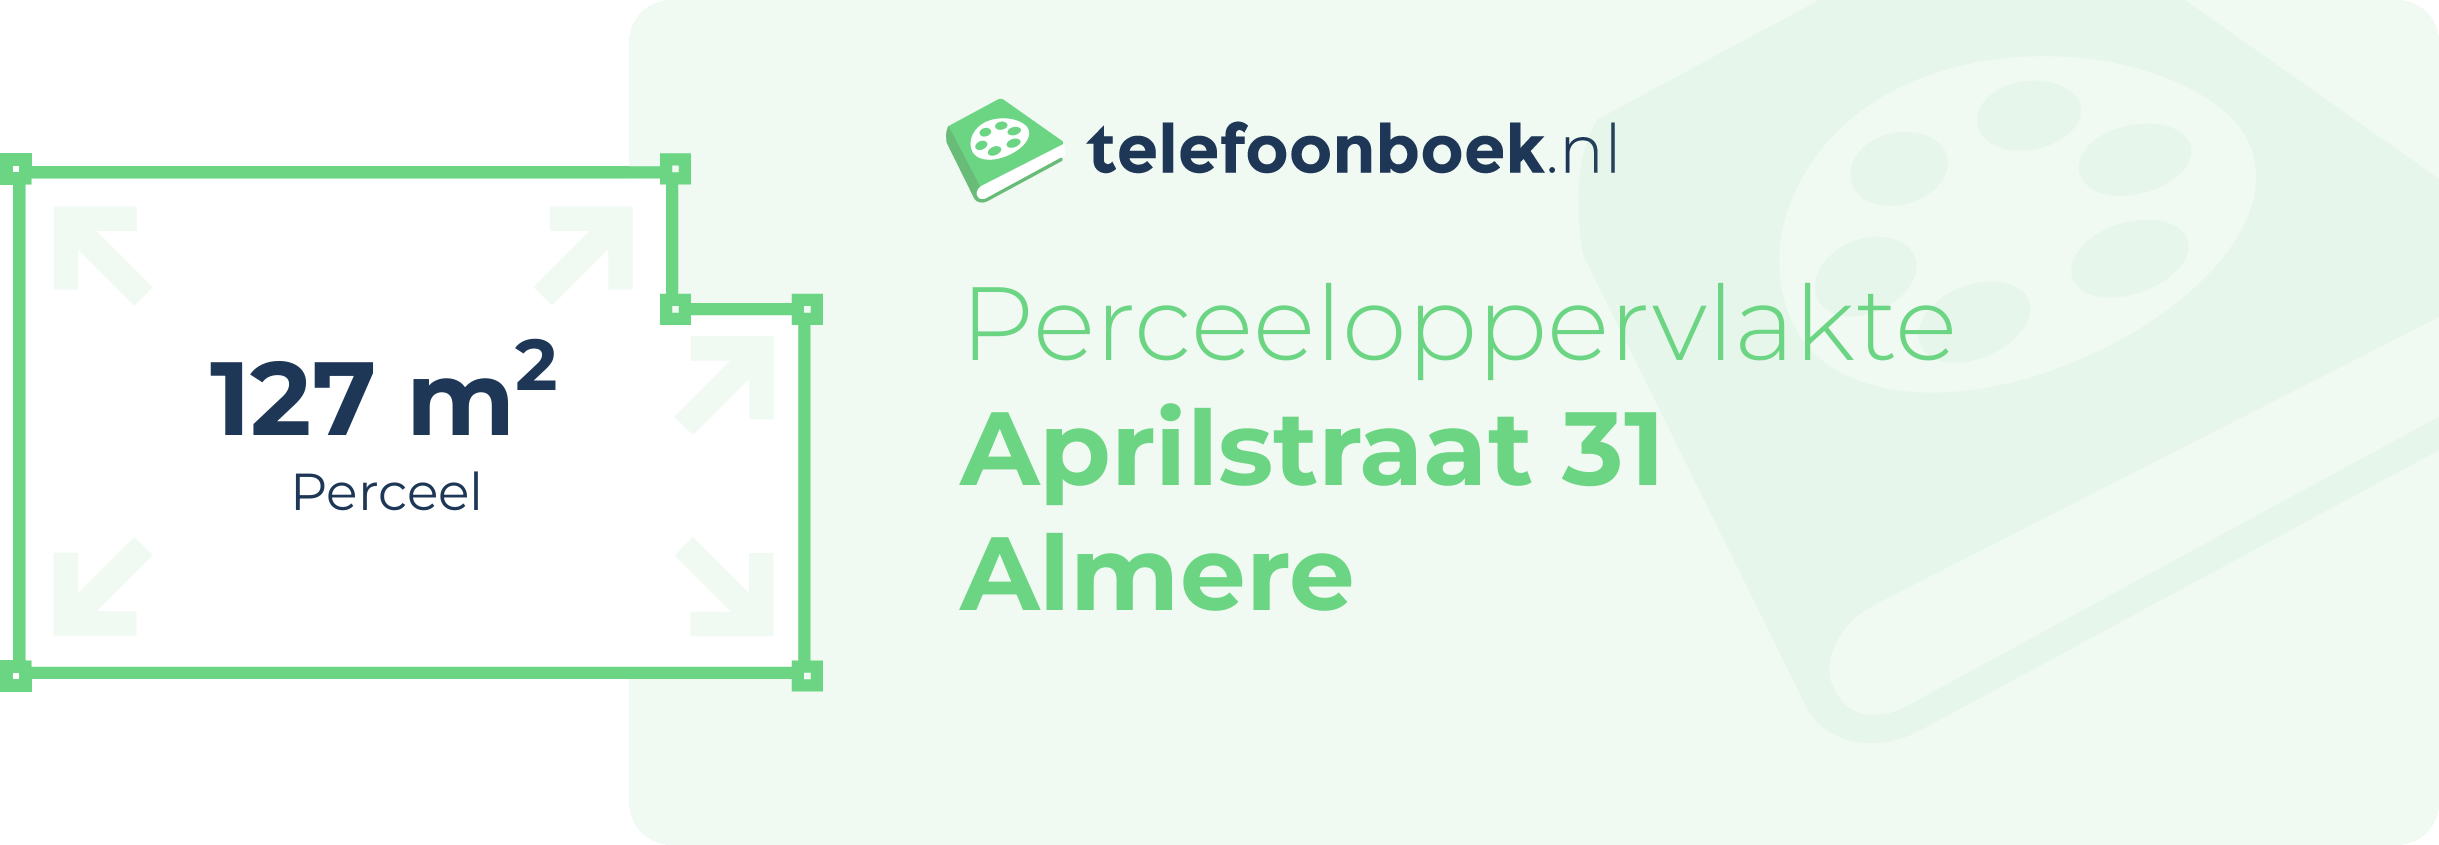 Perceeloppervlakte Aprilstraat 31 Almere